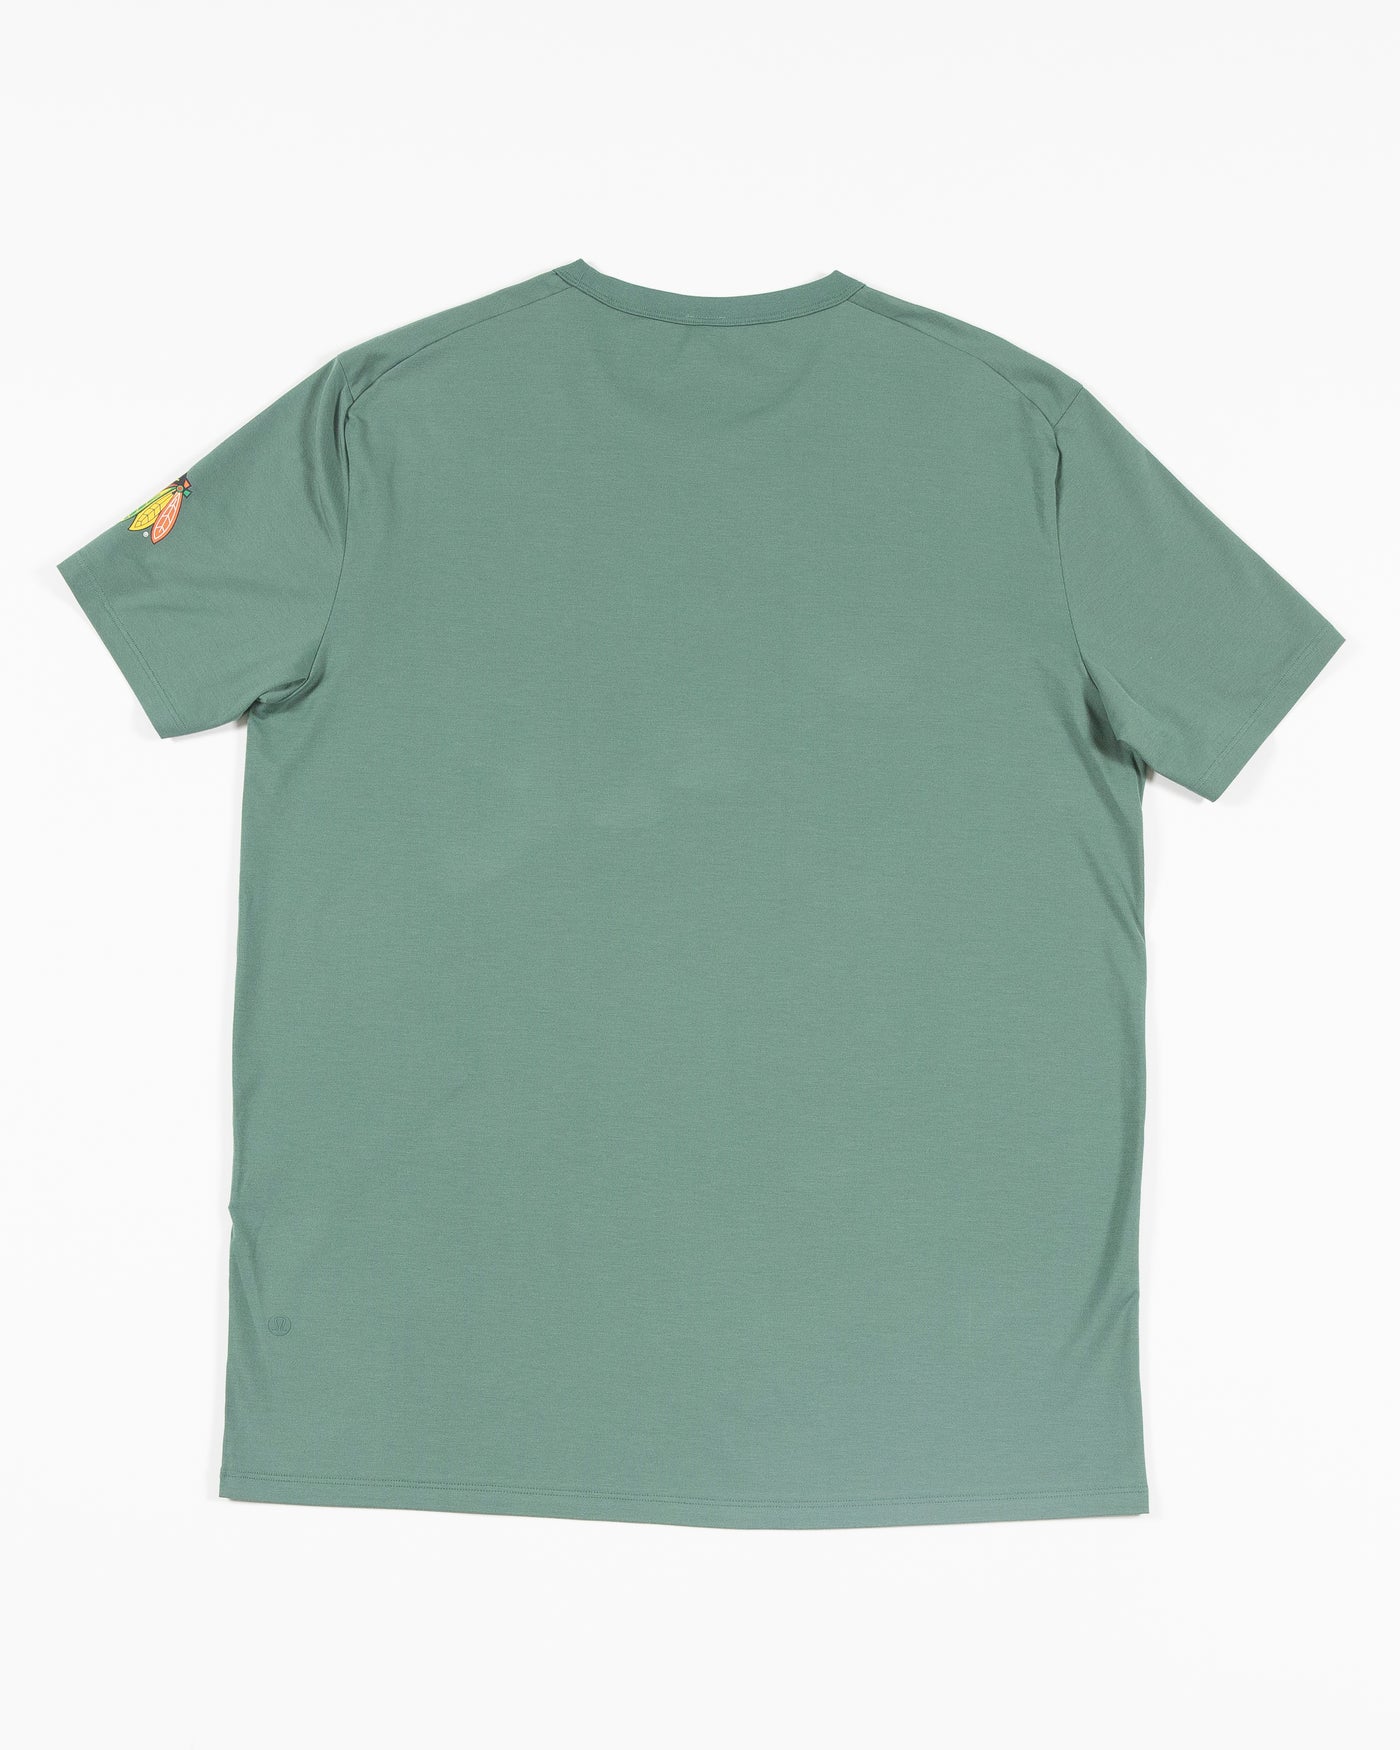 green lululemon t-shirt with Chicago Blackhawks primary logo on left shoulder - back lay flat